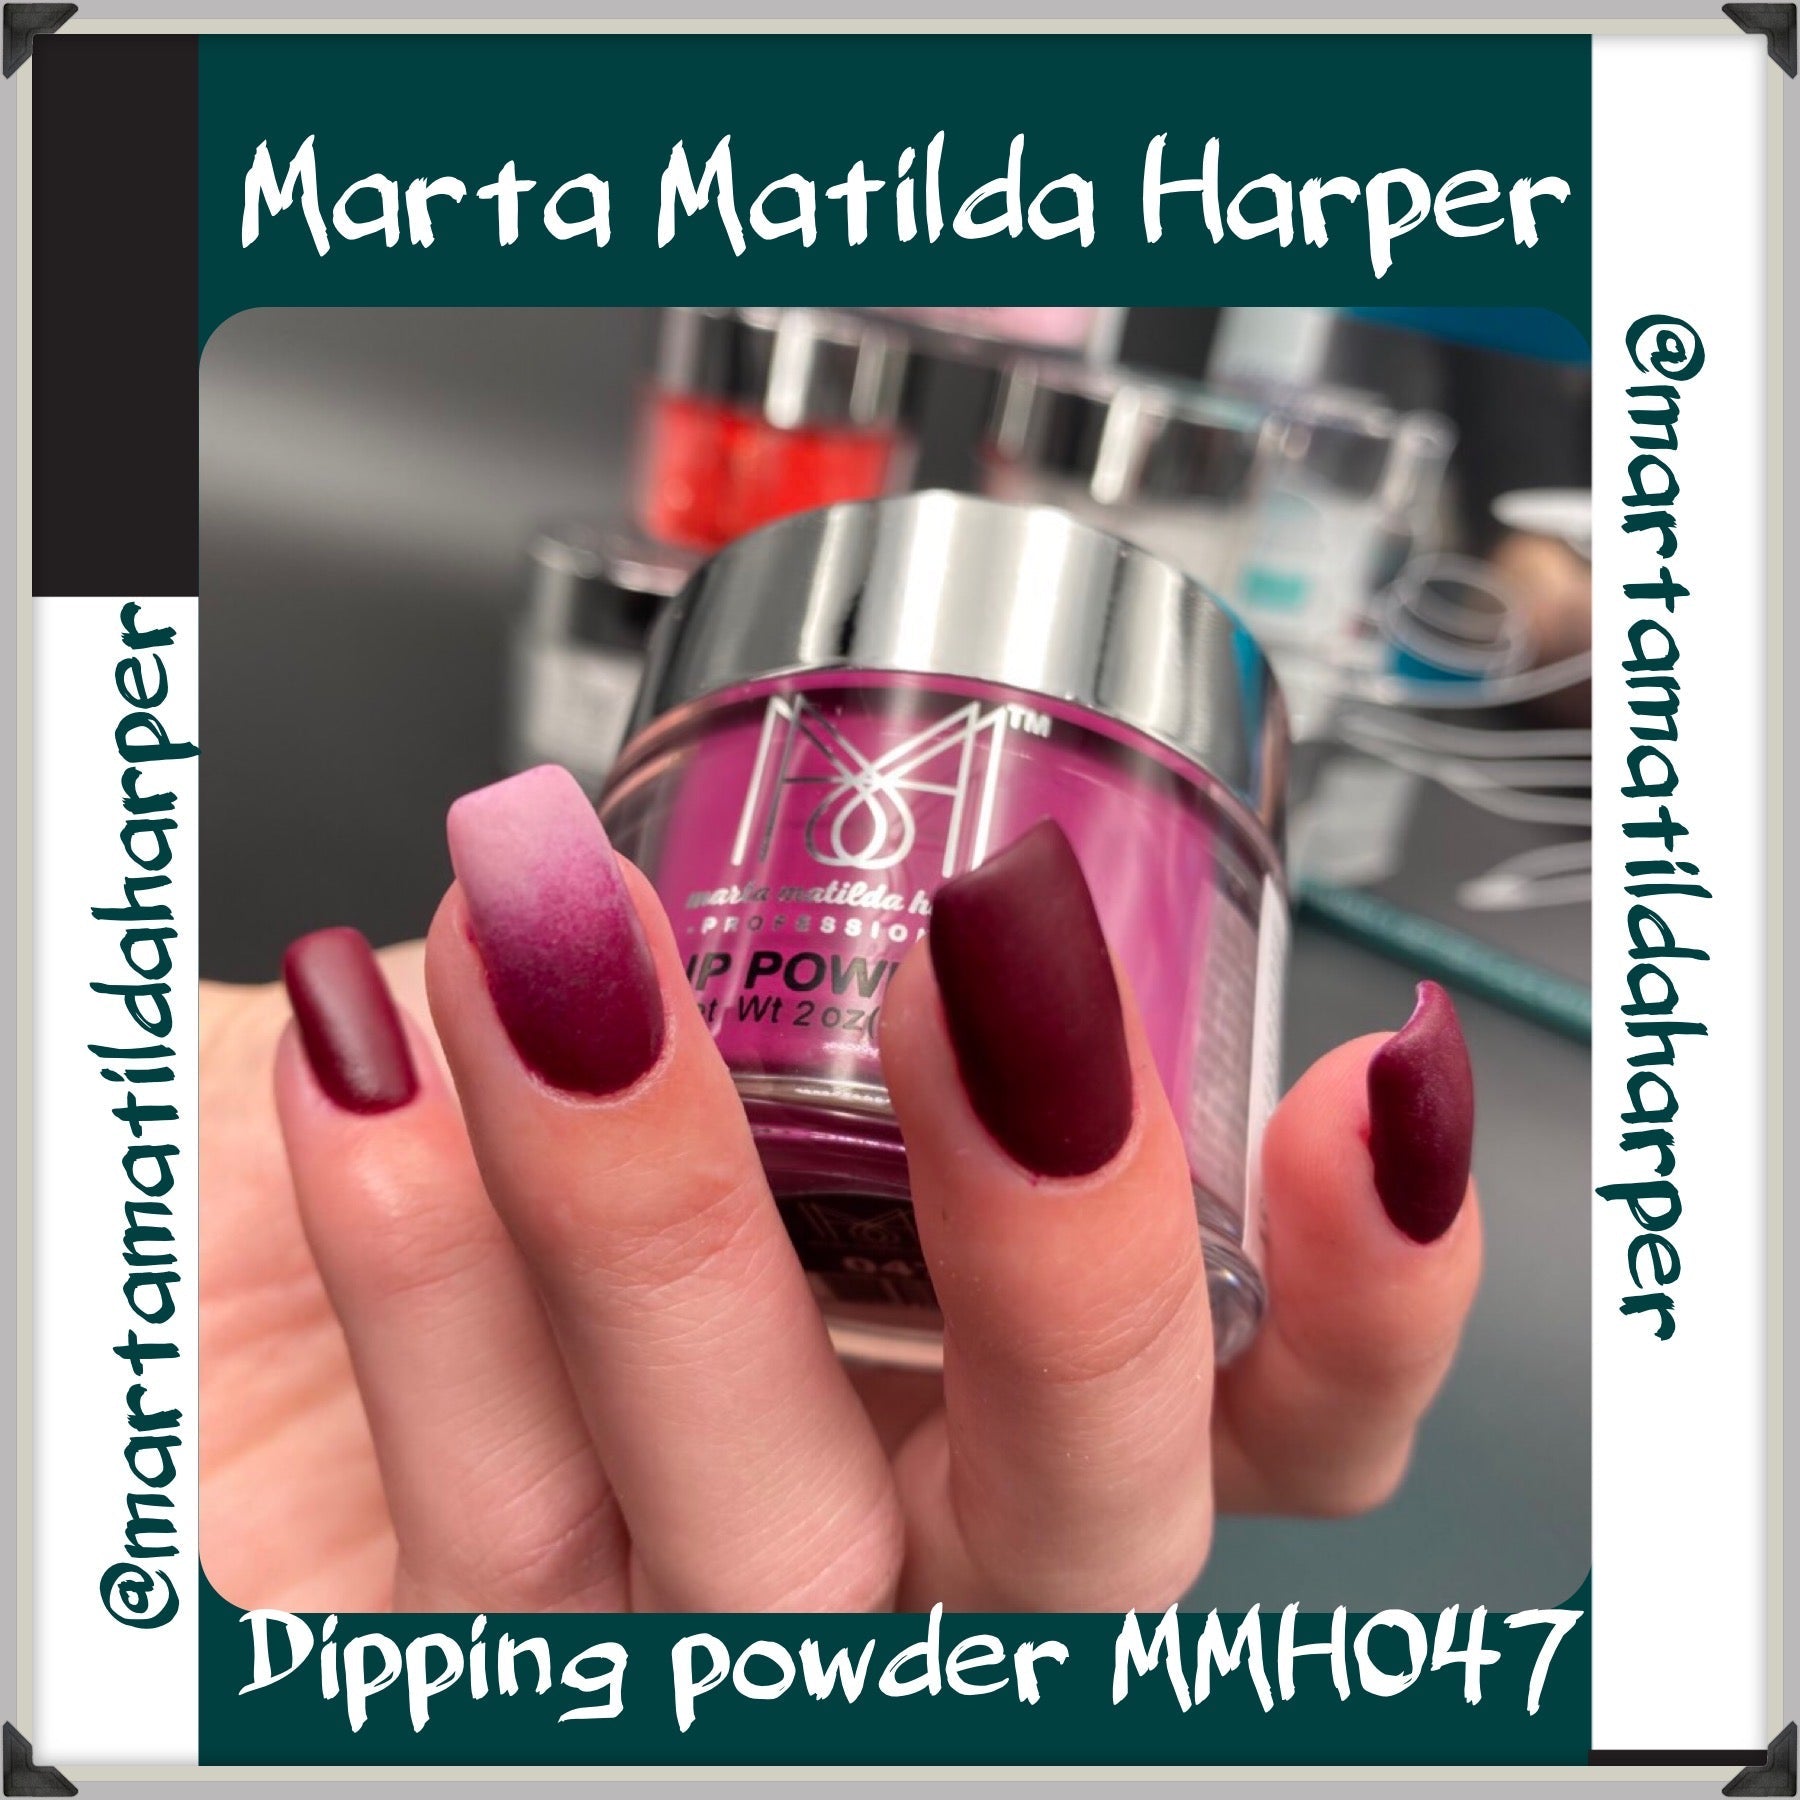 Dipping powder MMH047 - Marta Matilda Harper